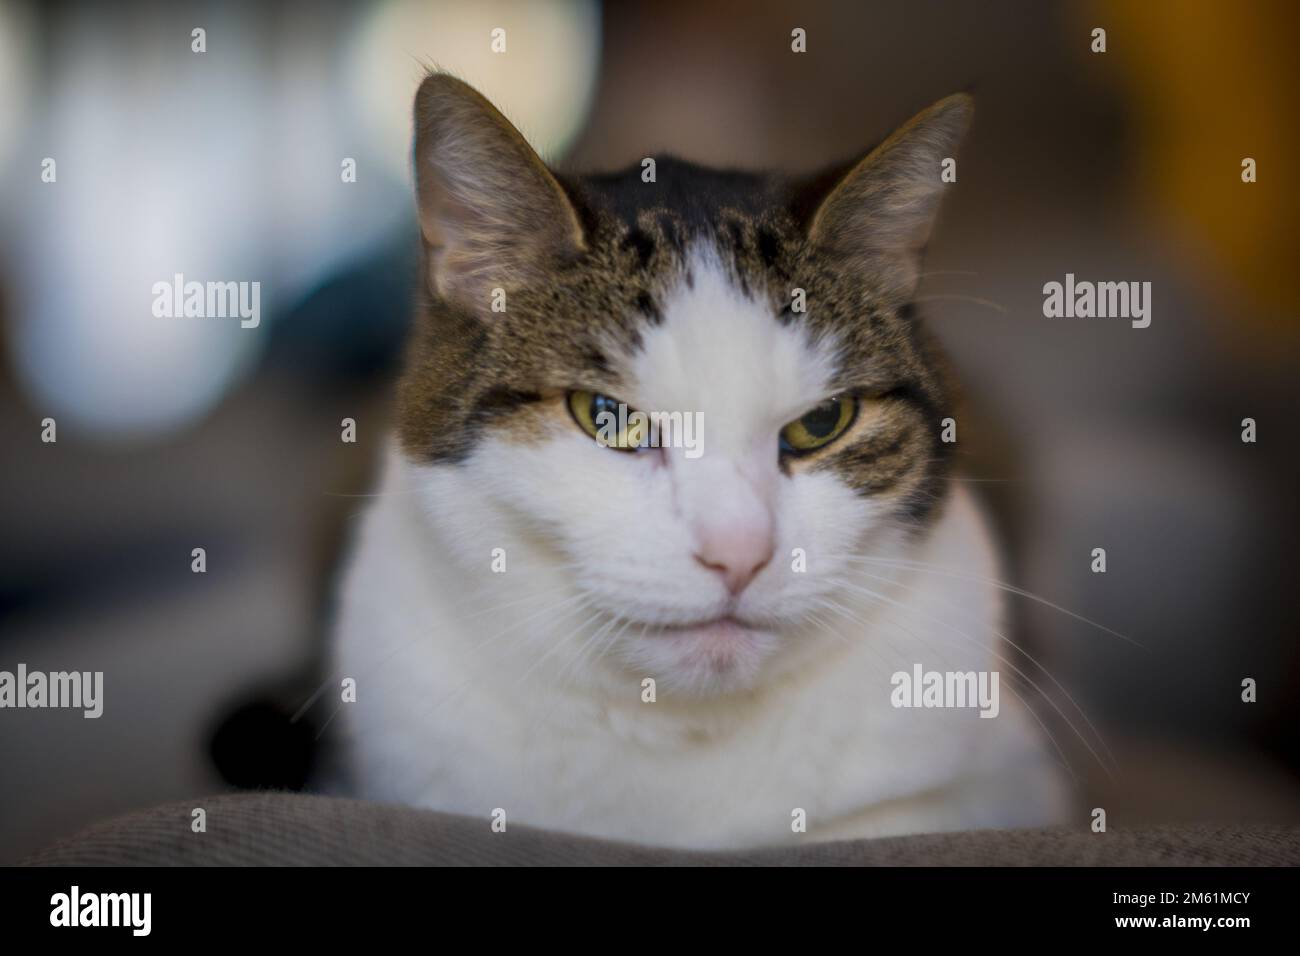 close-up shot of a cat Stock Photo